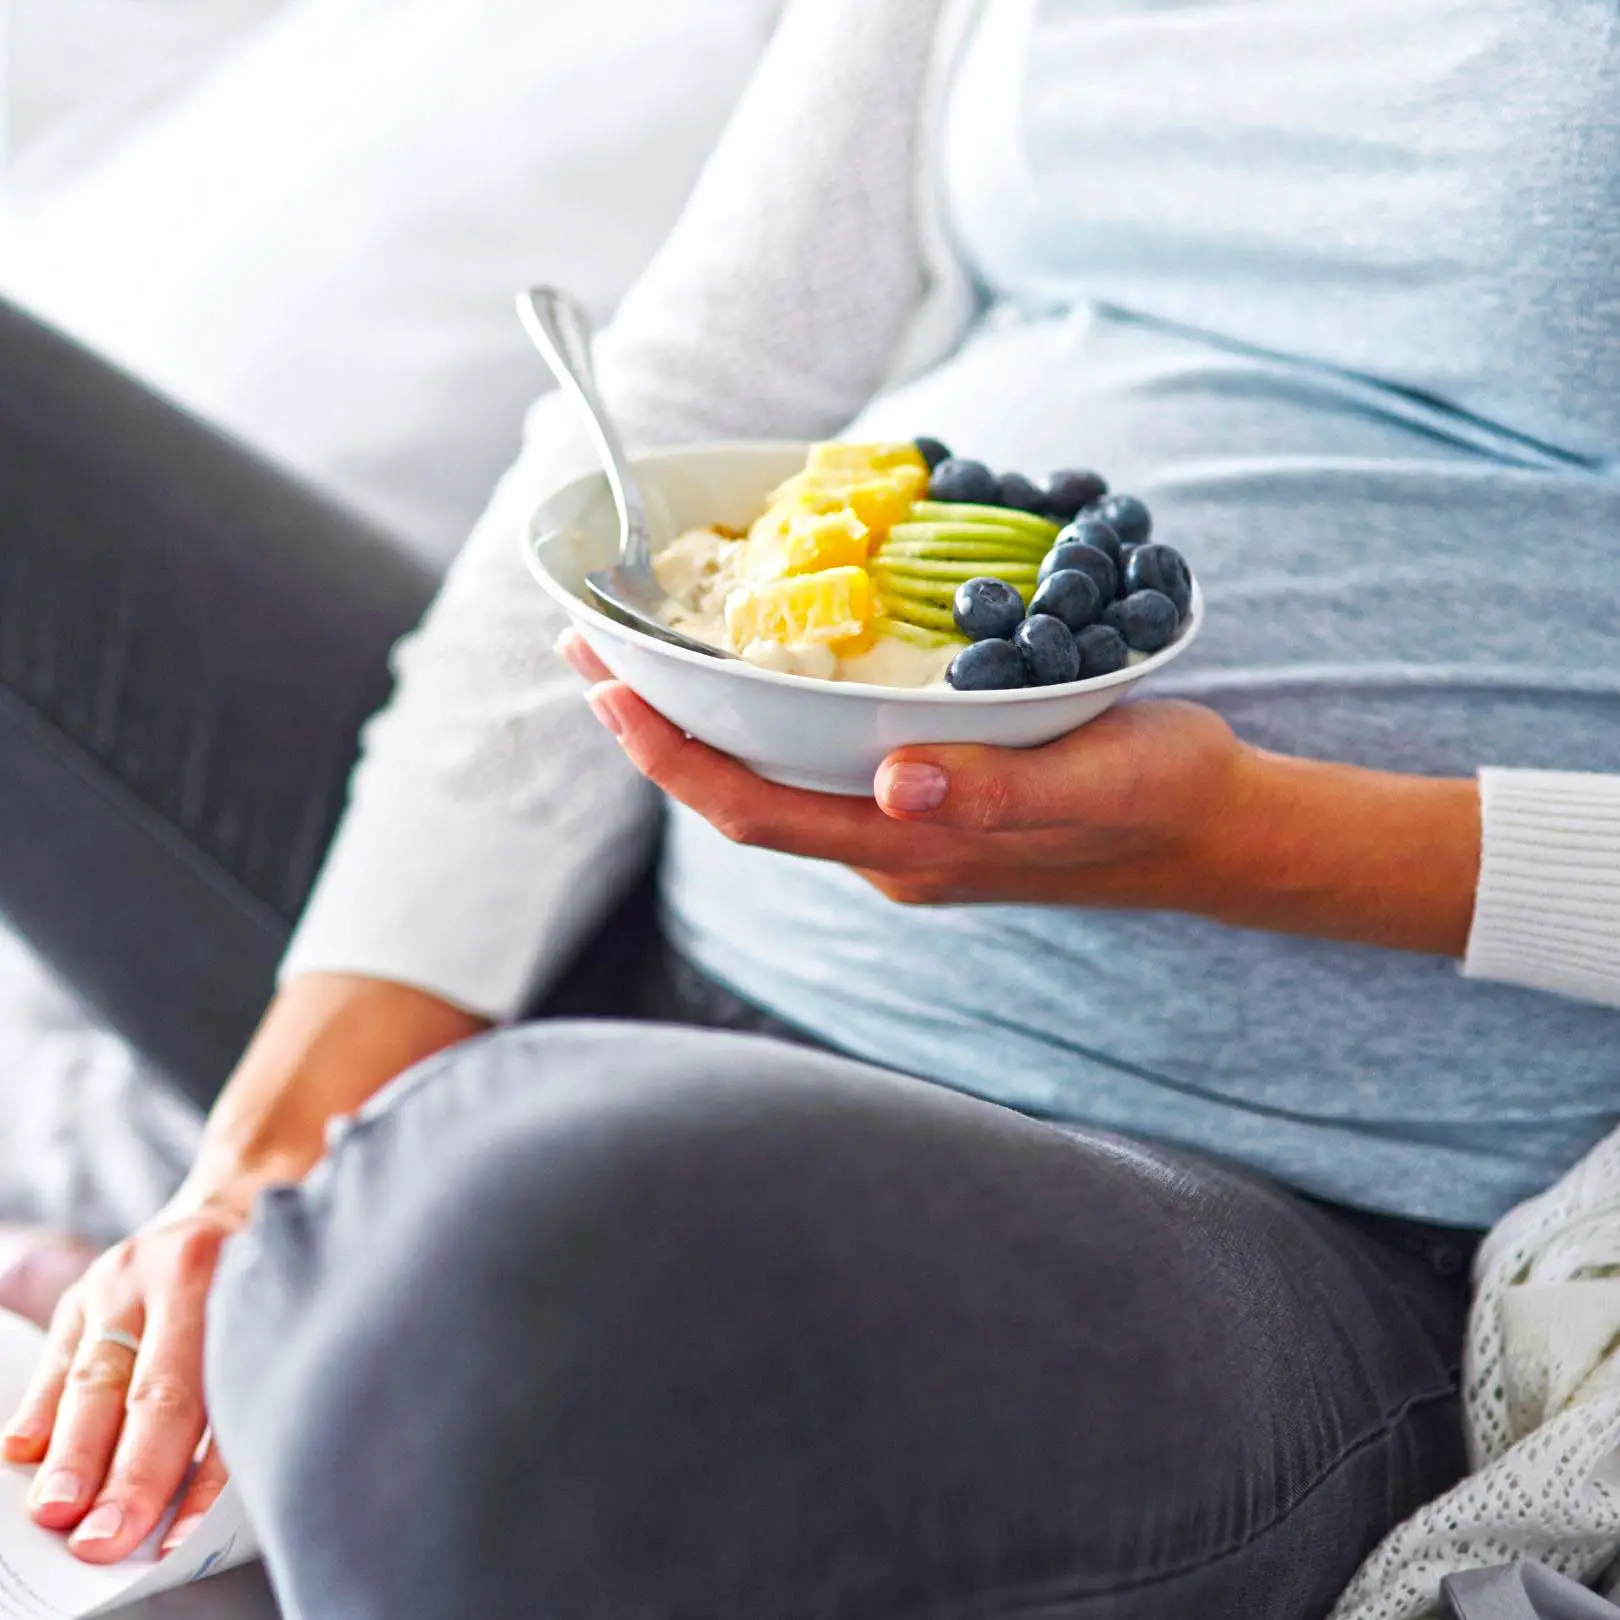 Pregnant woman eating yogurt